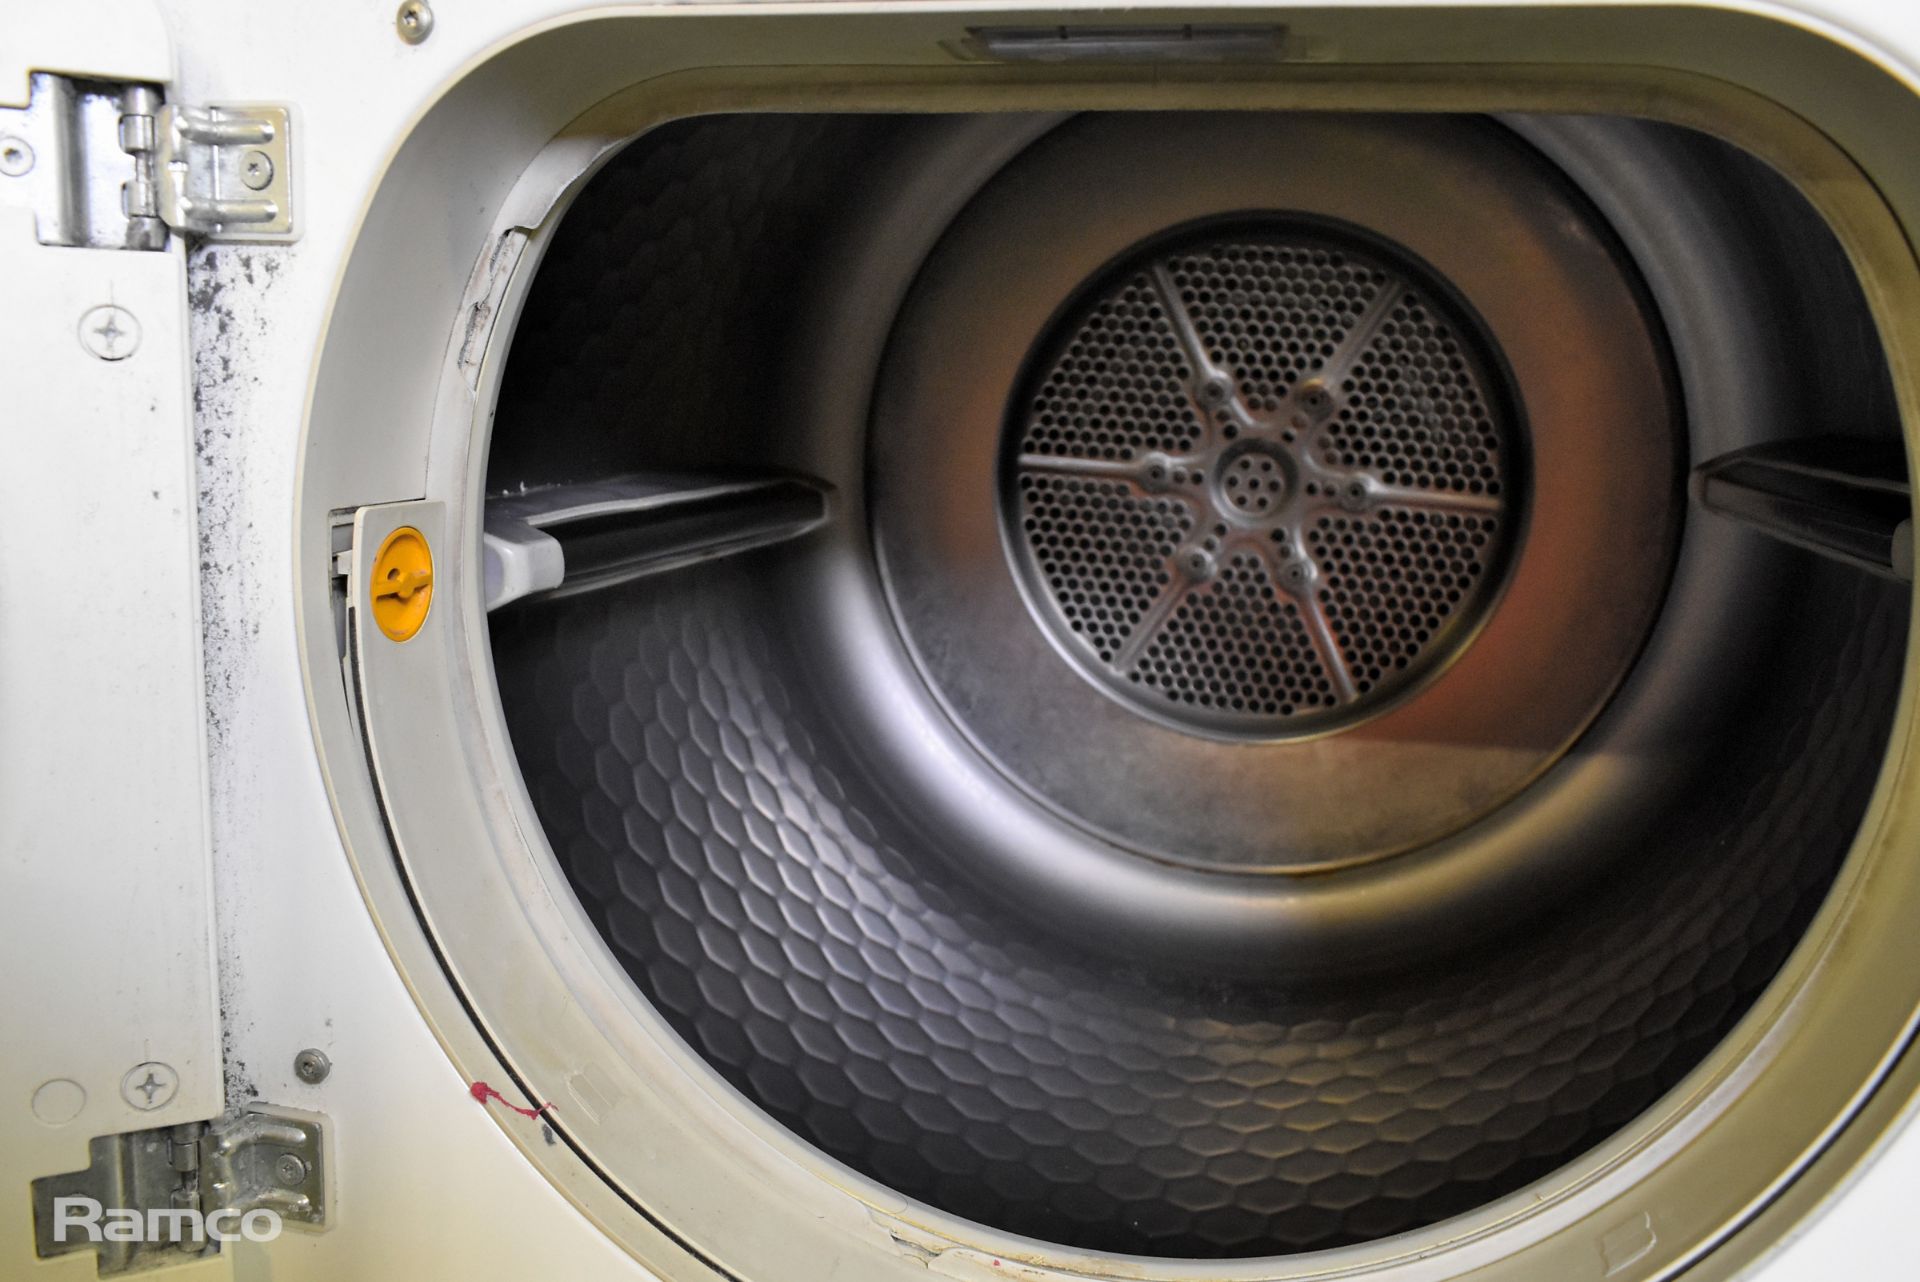 Miele PT 7136 6.5kg vented tumble dryer - W 595 x D 700 x H 850mm - Image 5 of 6